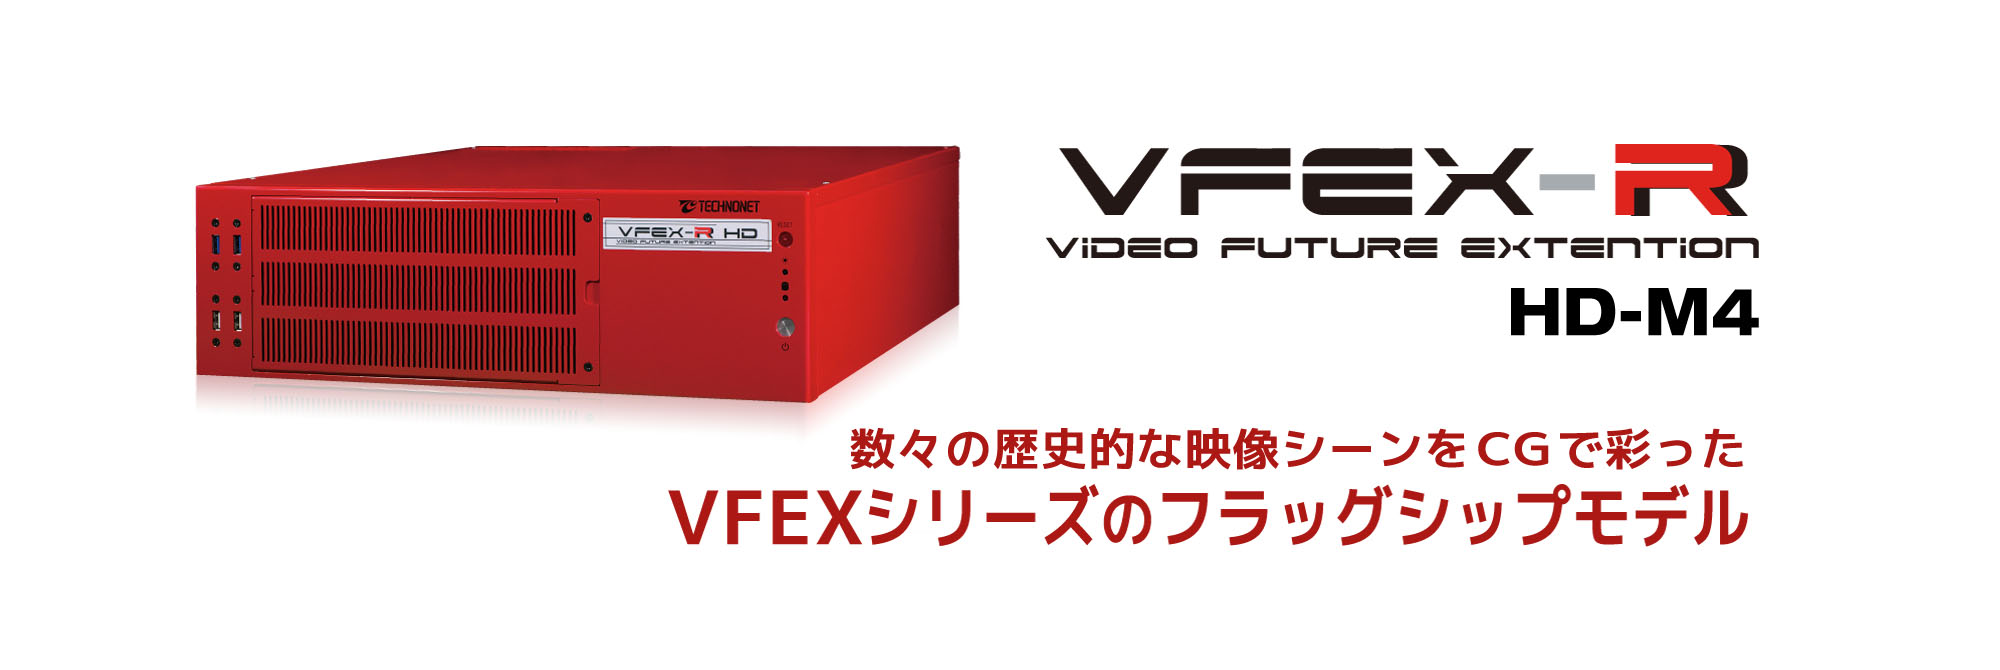 VFEX-R(HD-M4)製品画像